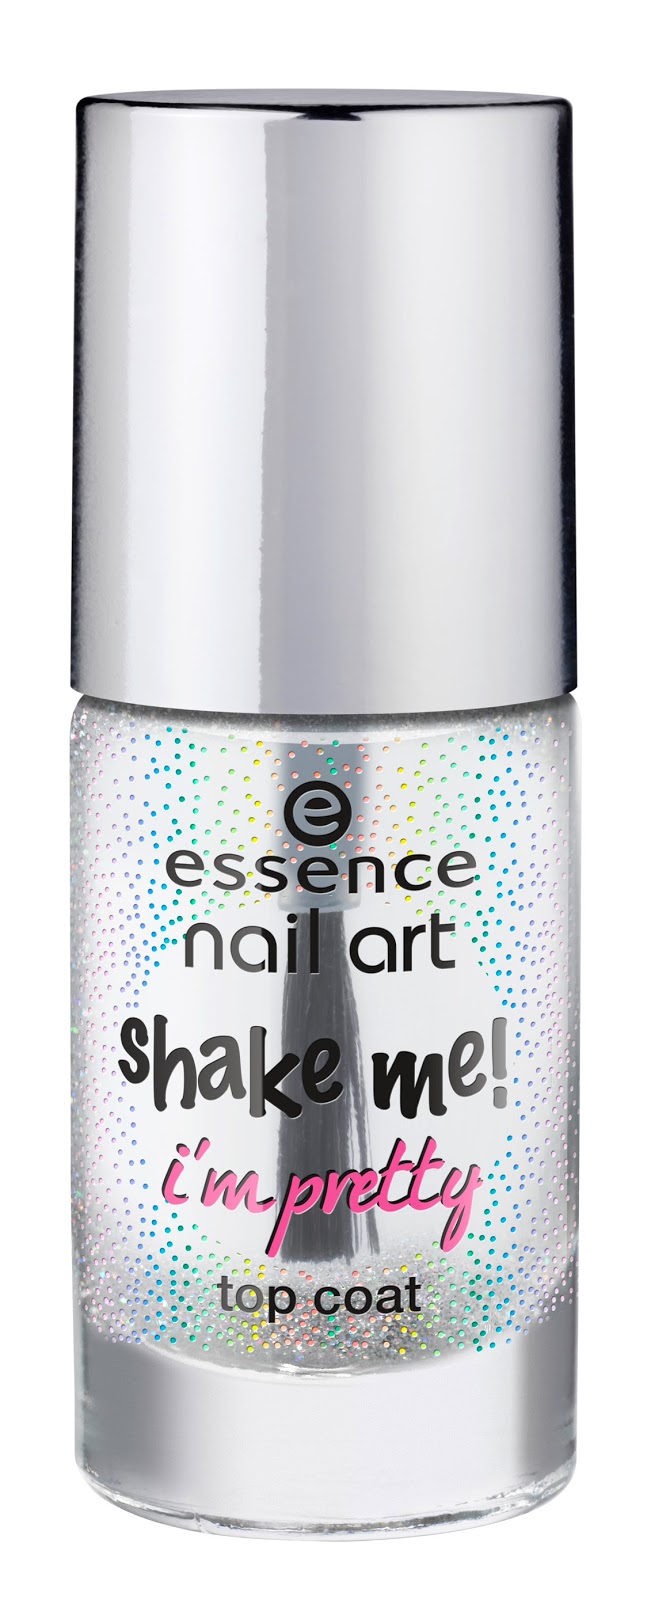 Essence nail art shake me! I’m pretty top coat